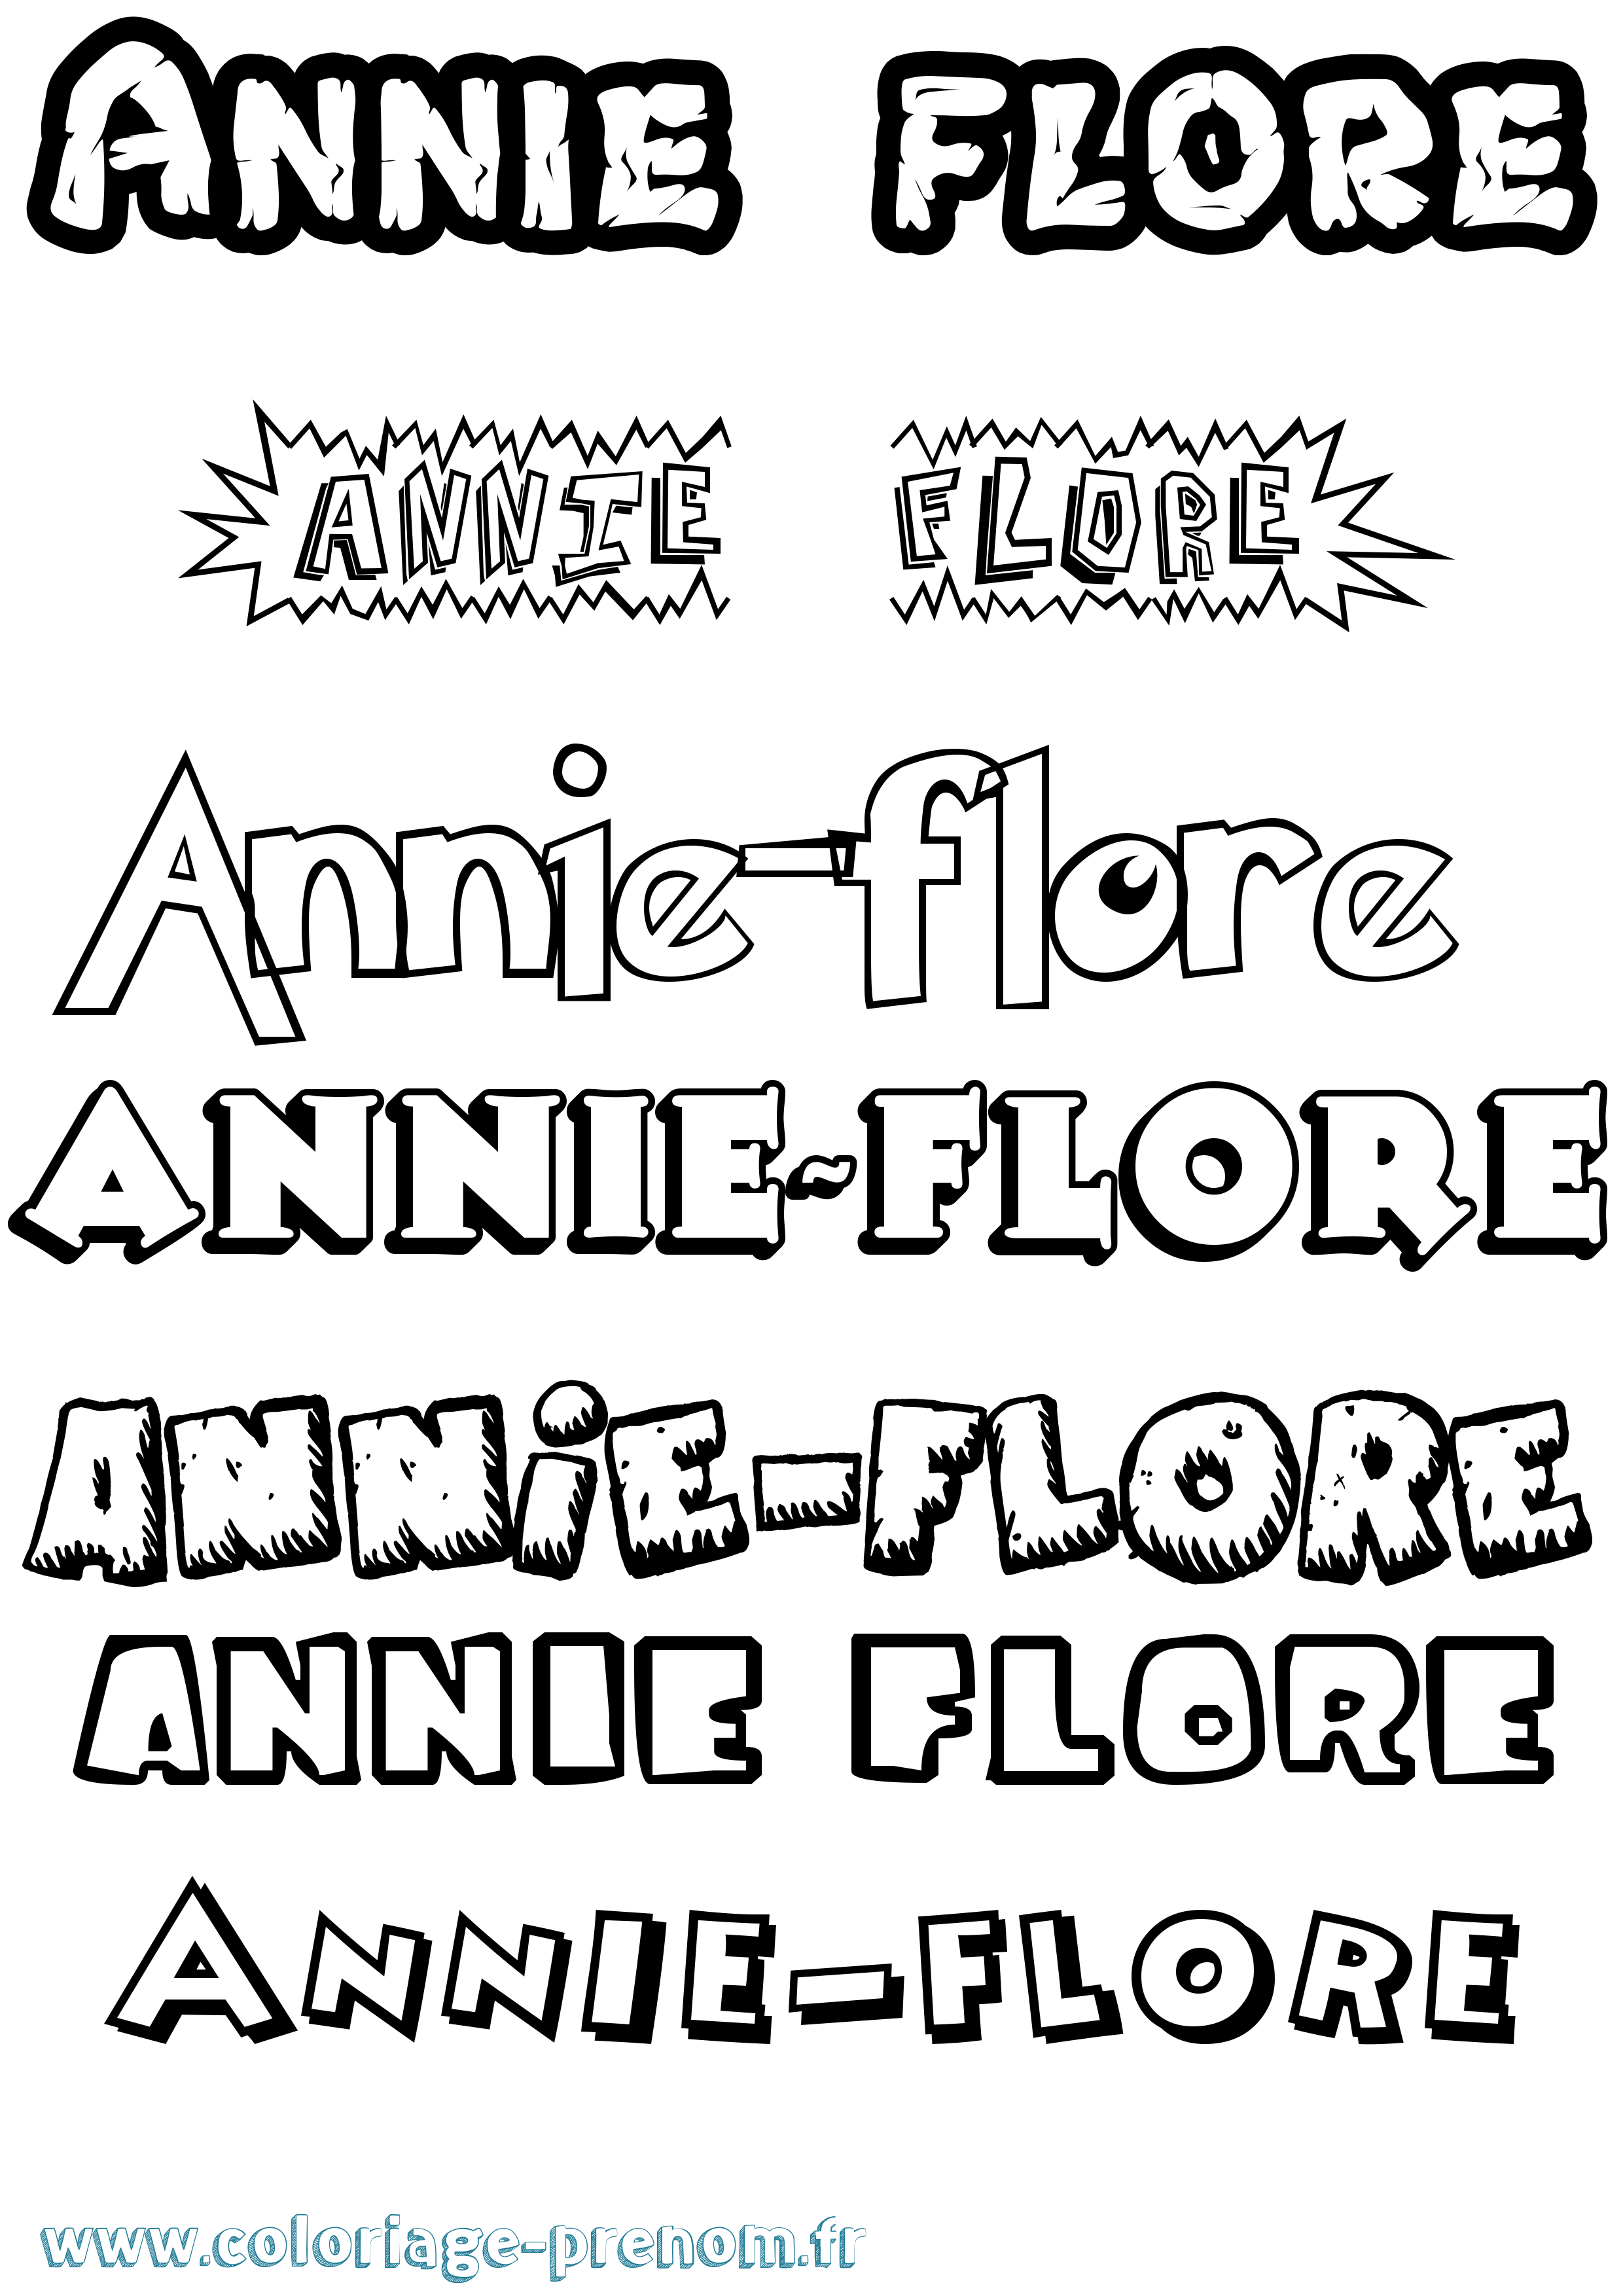 Coloriage prénom Annie-Flore Dessin Animé